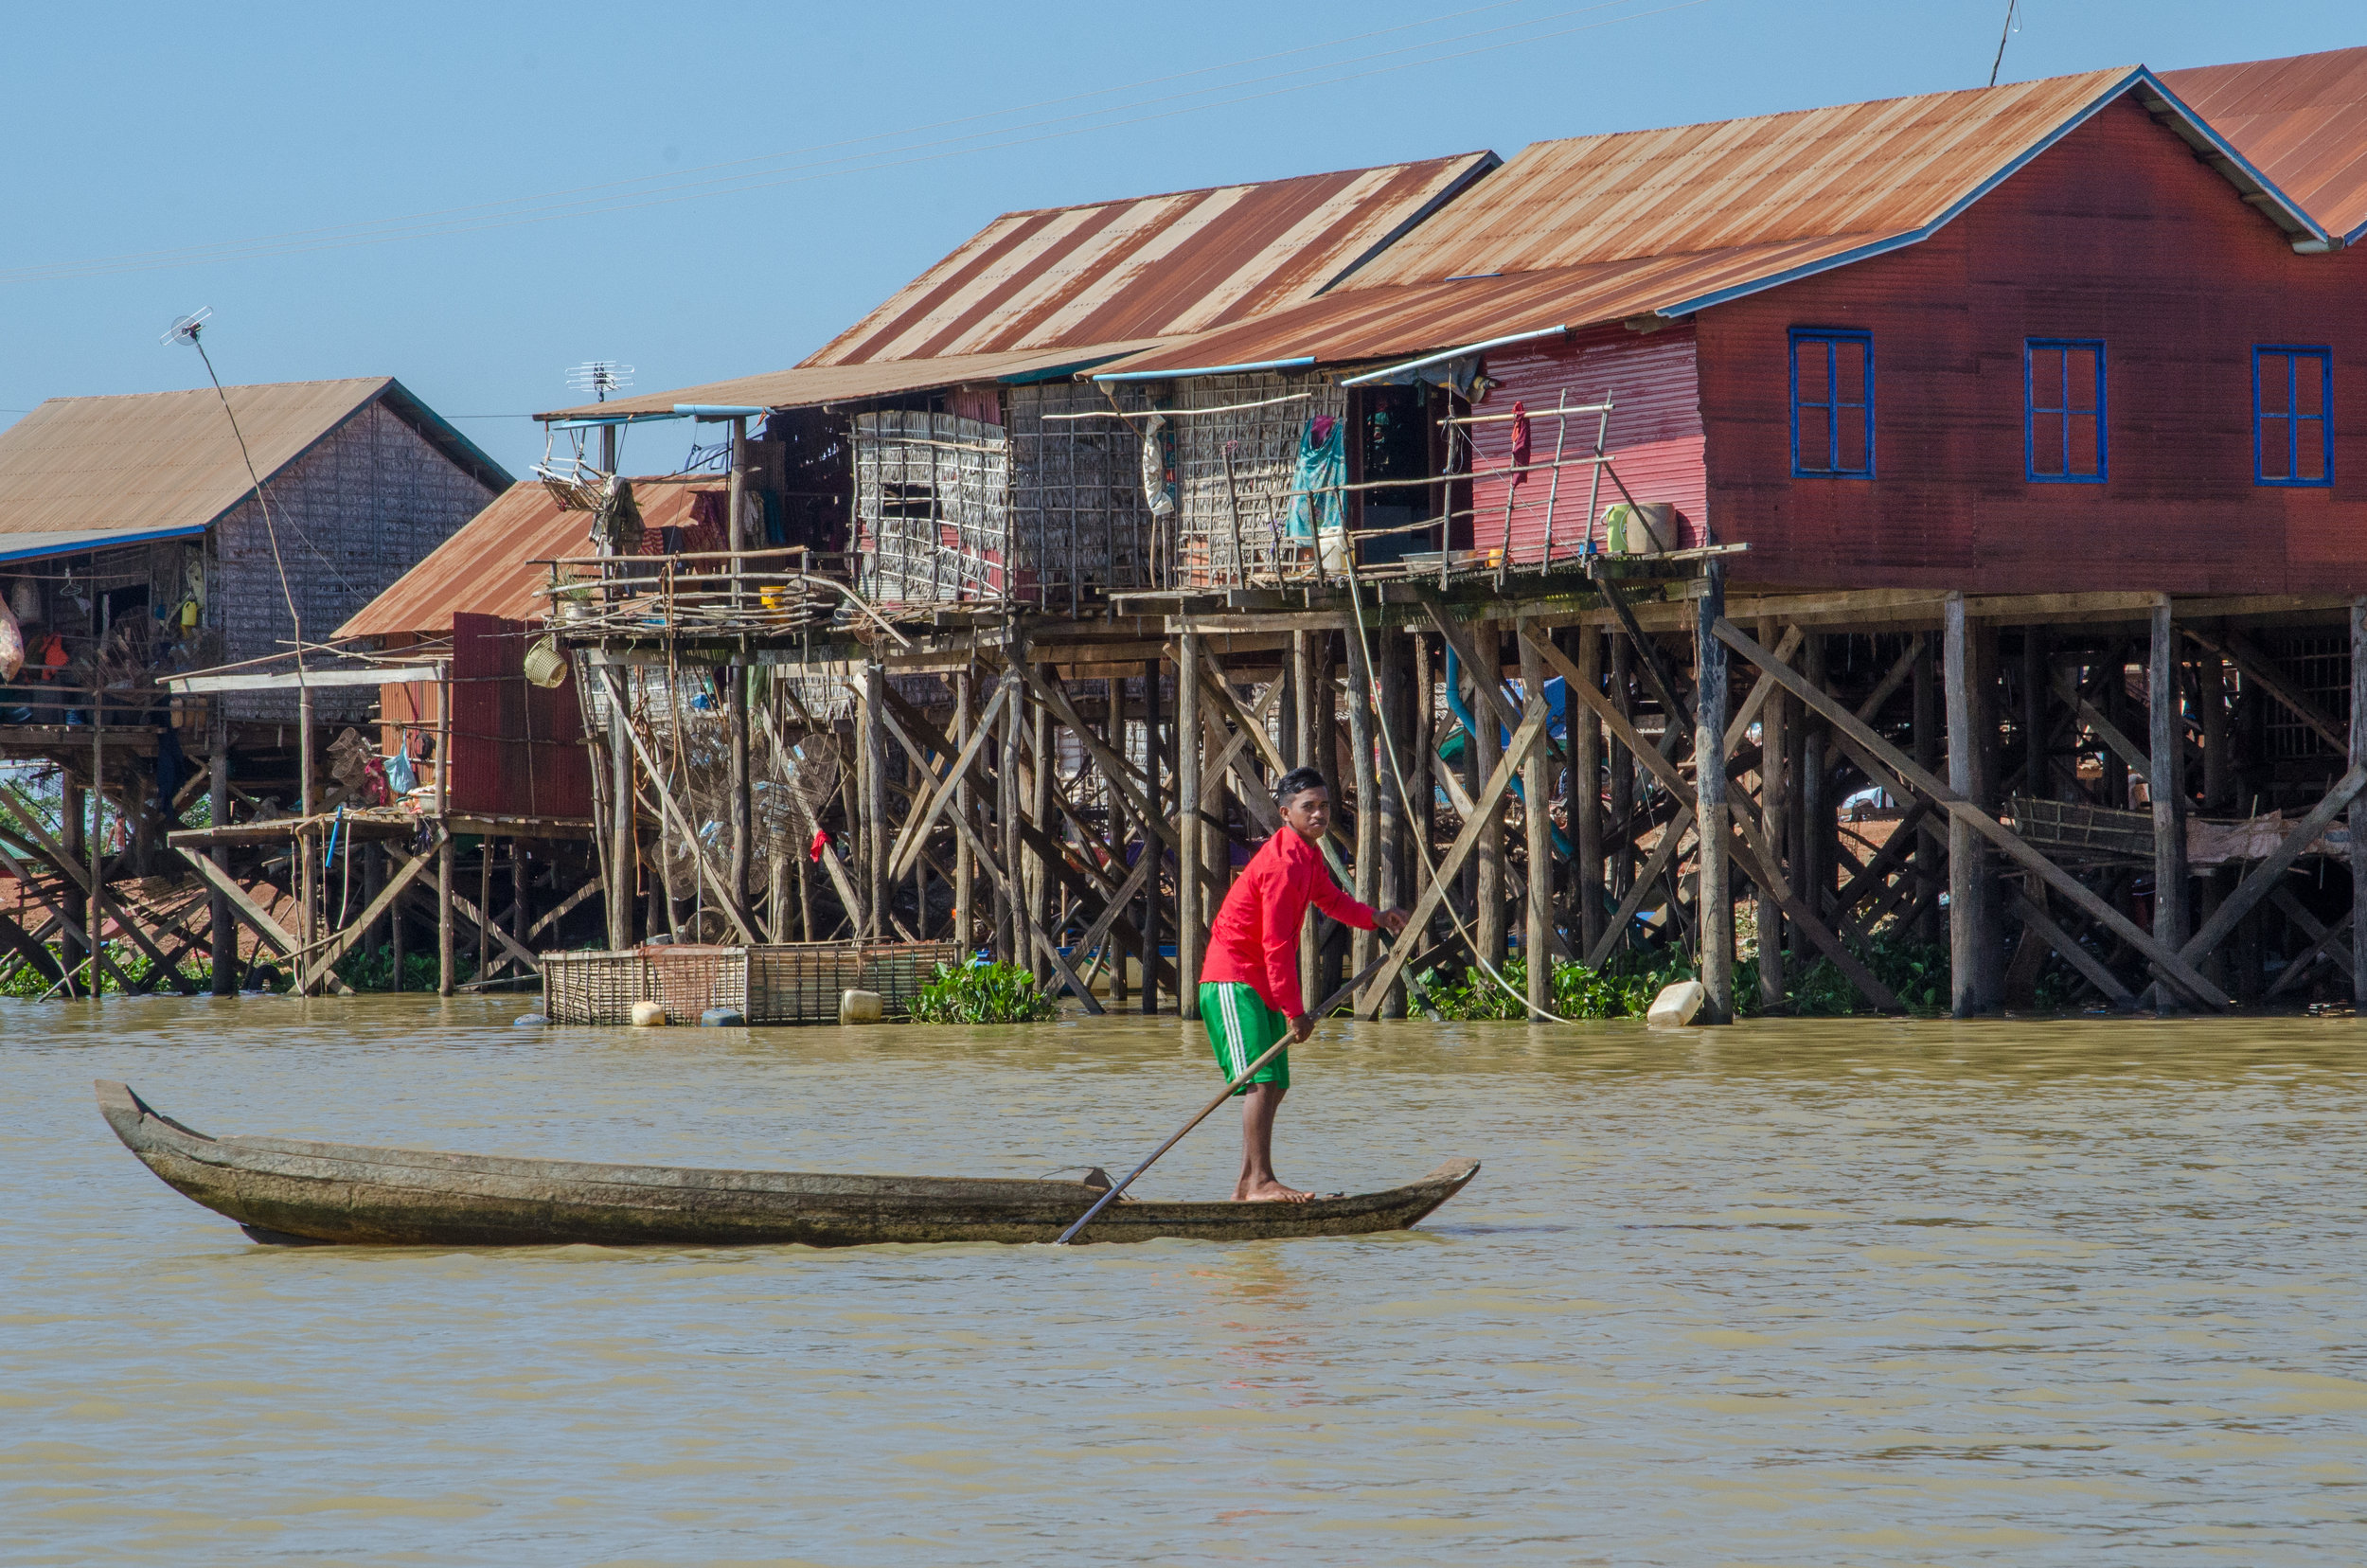 Kompong Khleang village, en route to Tonle Sap Lake, Cambodia